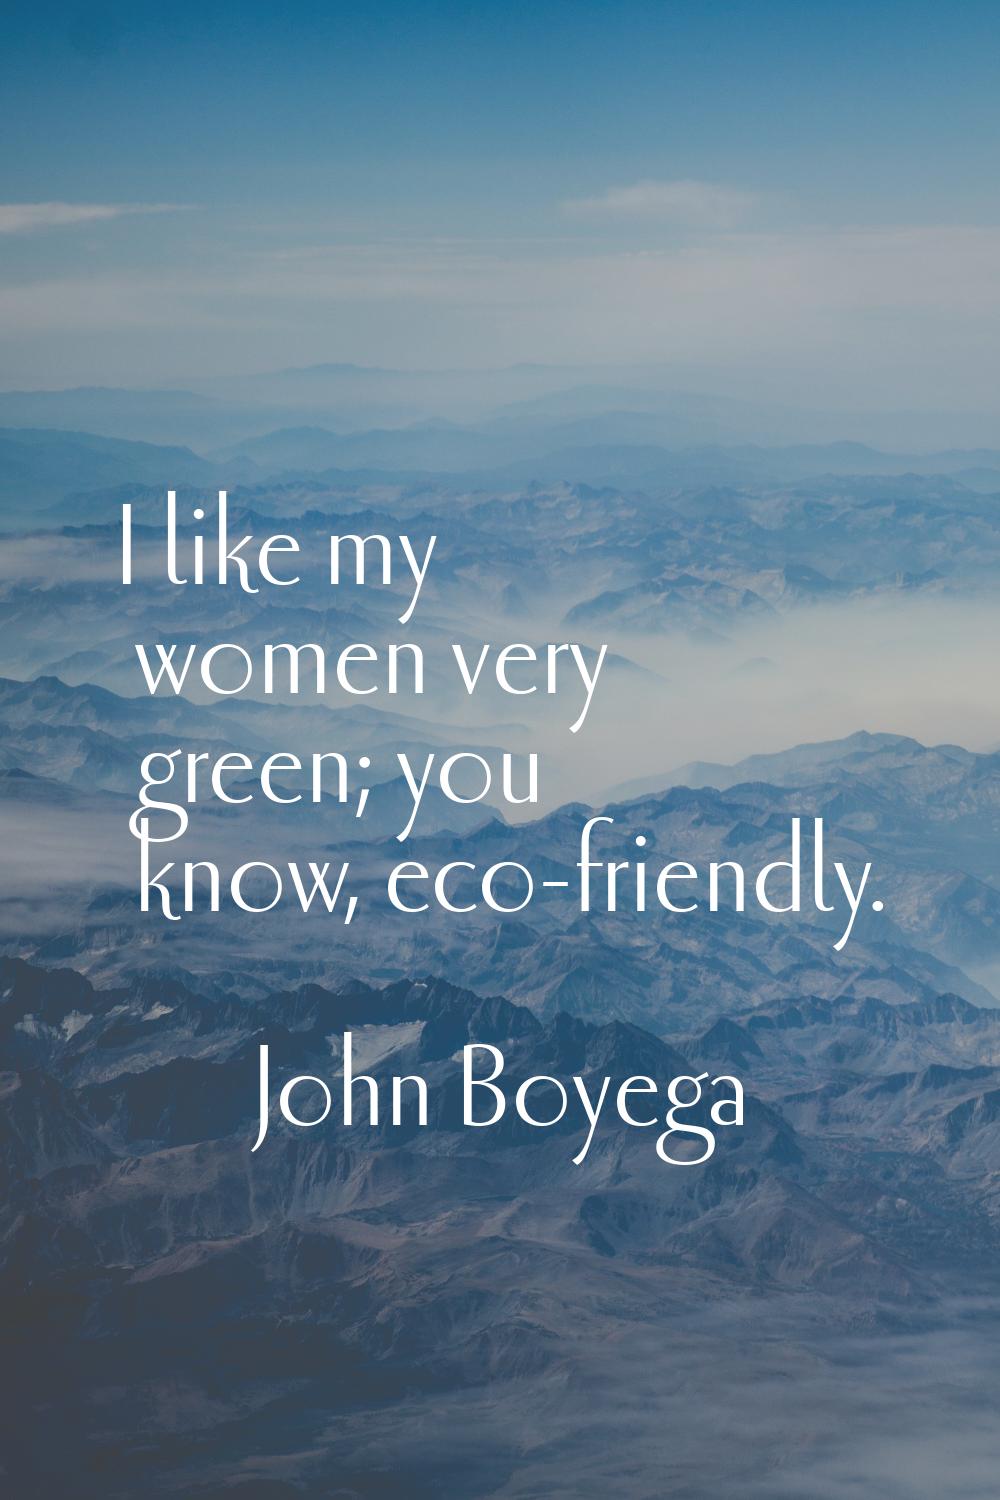 I like my women very green; you know, eco-friendly.